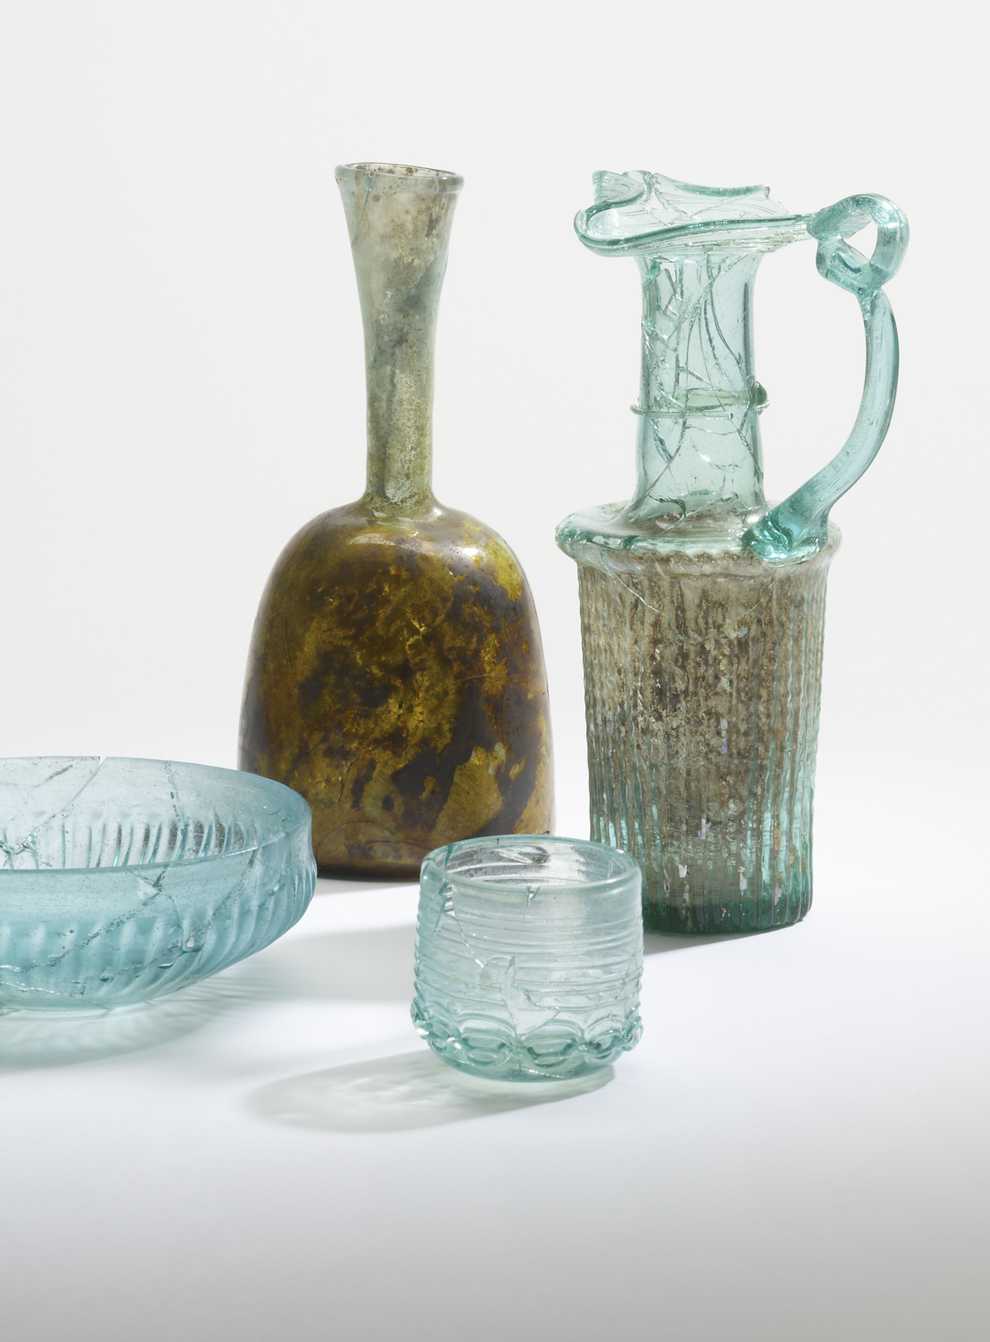 A Roman bowl, AD 50-70, Early Islamic flask, AD 700-1000, Byzantine cup, AD 500-700, Byzantine jug, AD 400-500 (British Museum)